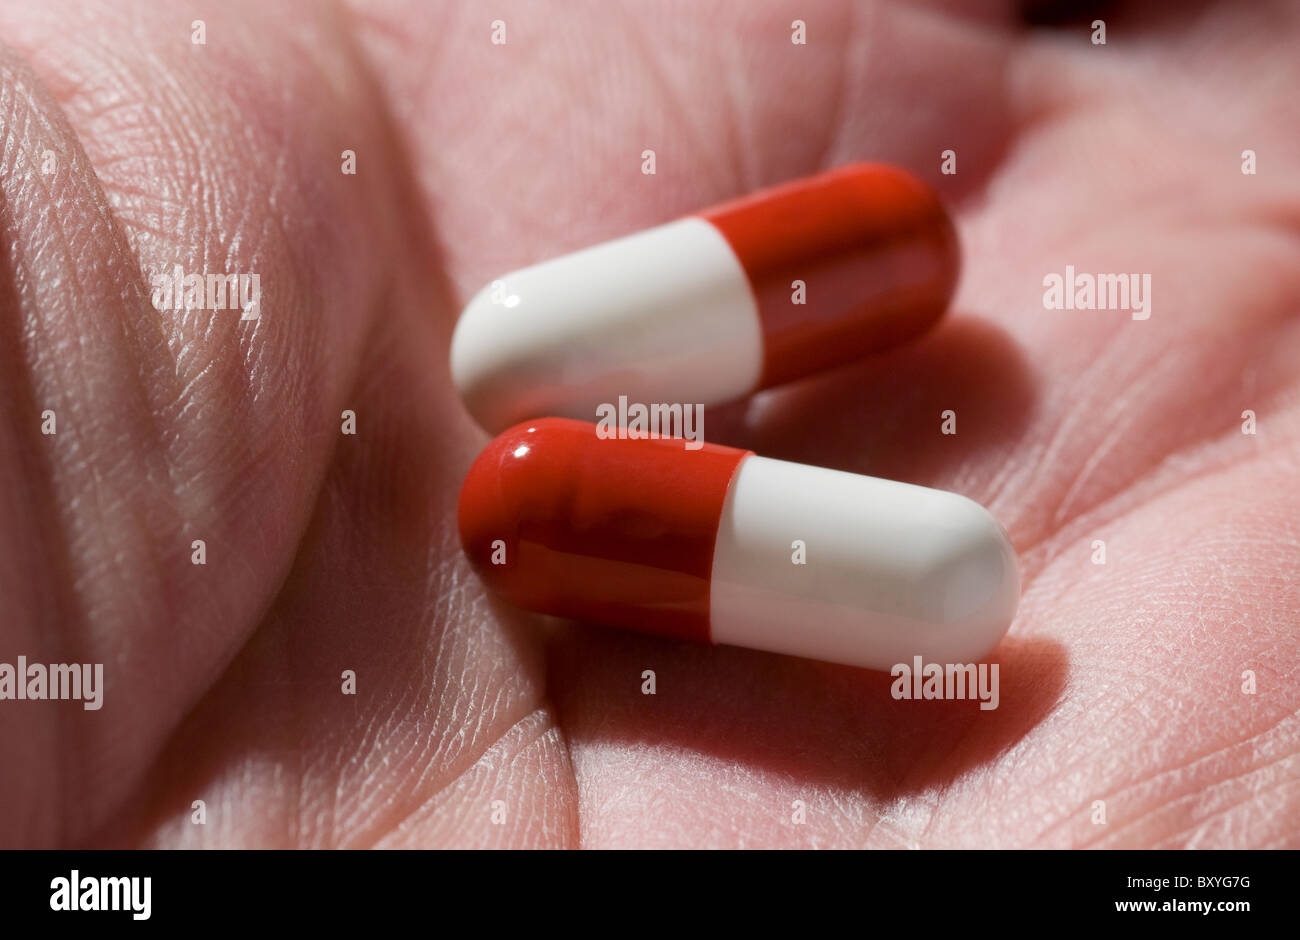 hand holding paracetamol capsules Stock Photo